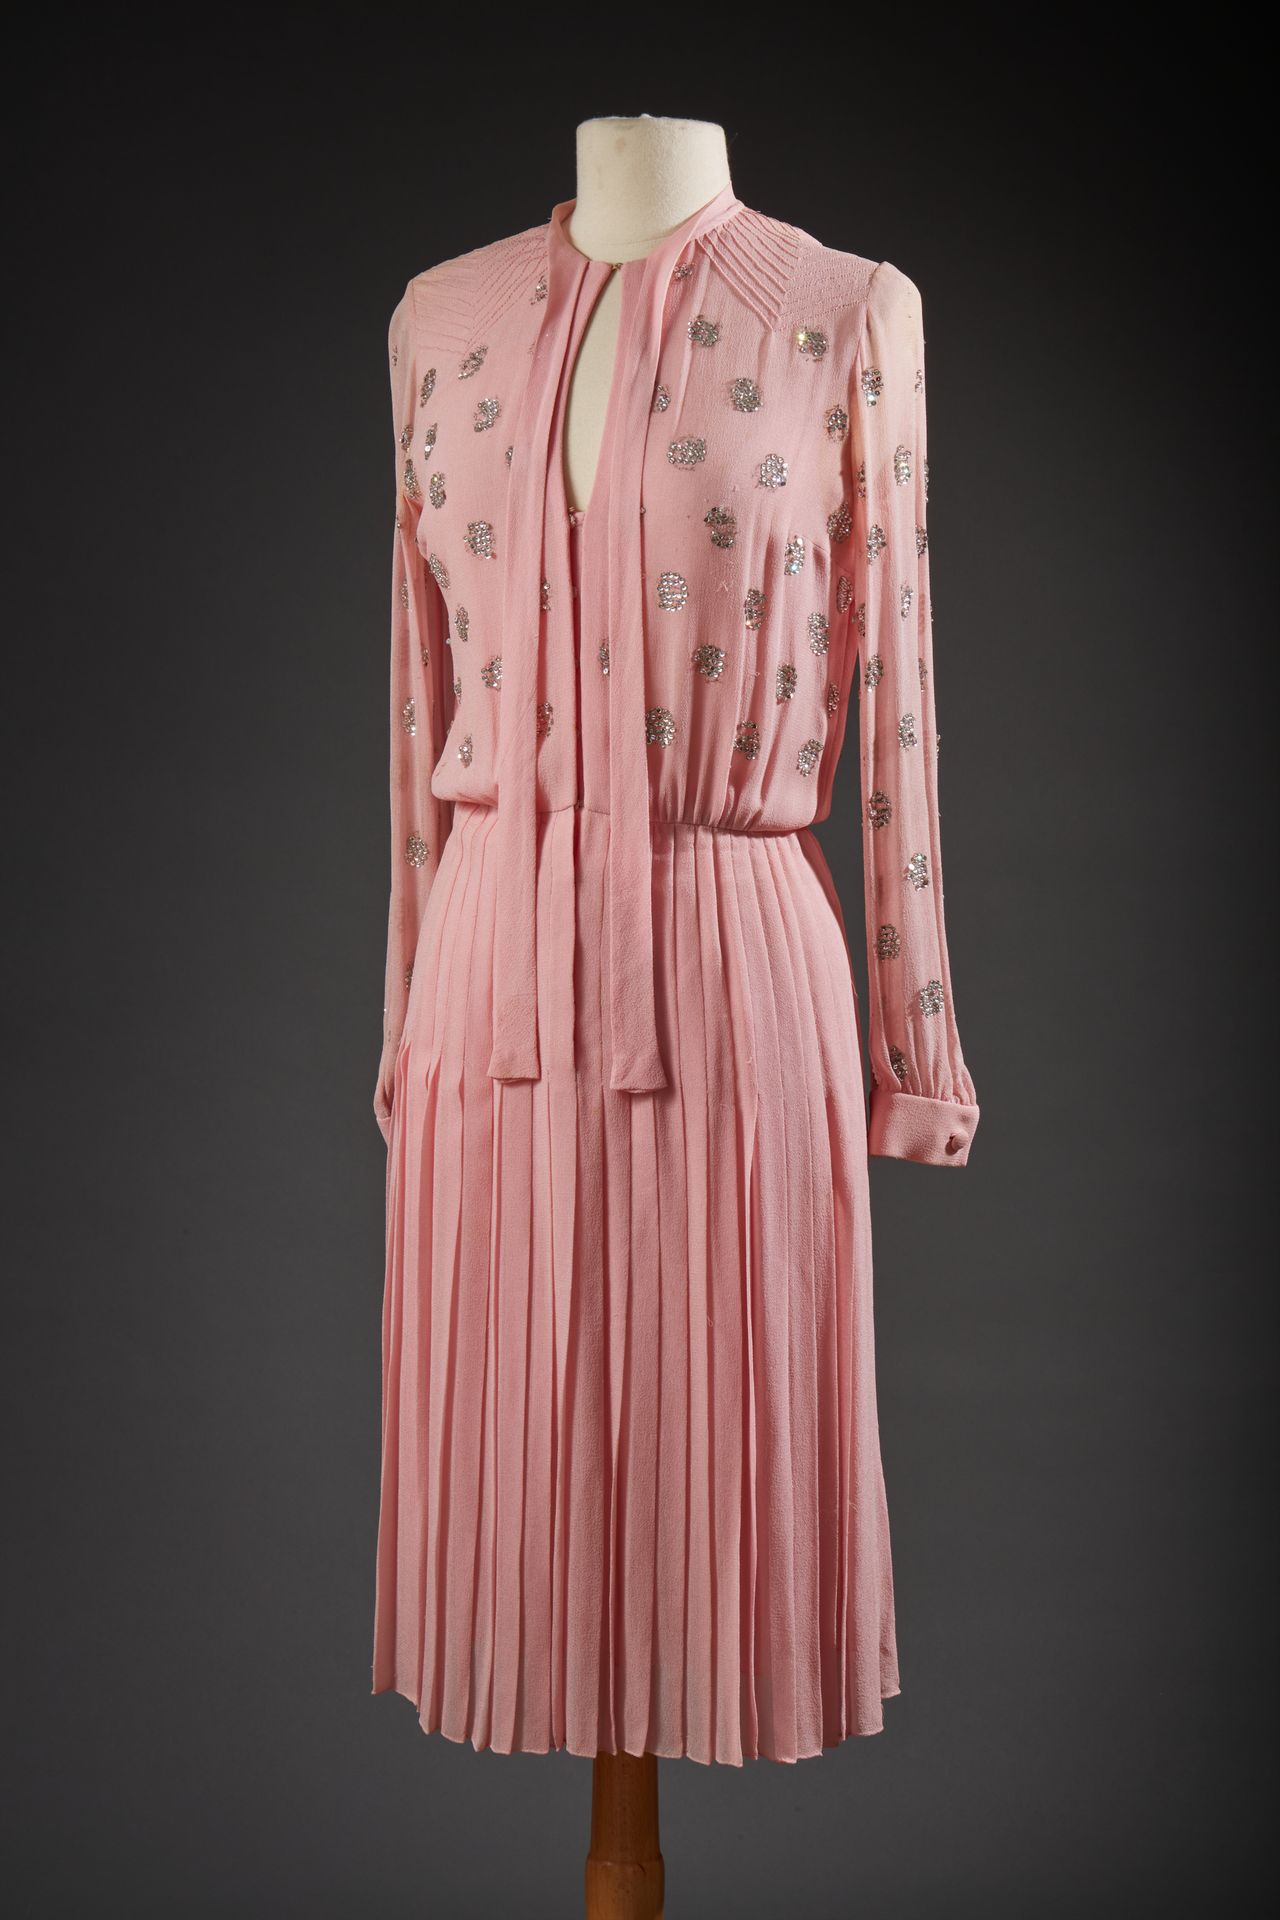 Null VALENTINO COUTURE，1970年初
	淡粉色丝质雪纺连衣裙，背部有人字形缝线，领口有两条领带装饰，胸部有银色亮片，褶皱裙，大约S码 
(&hellip;